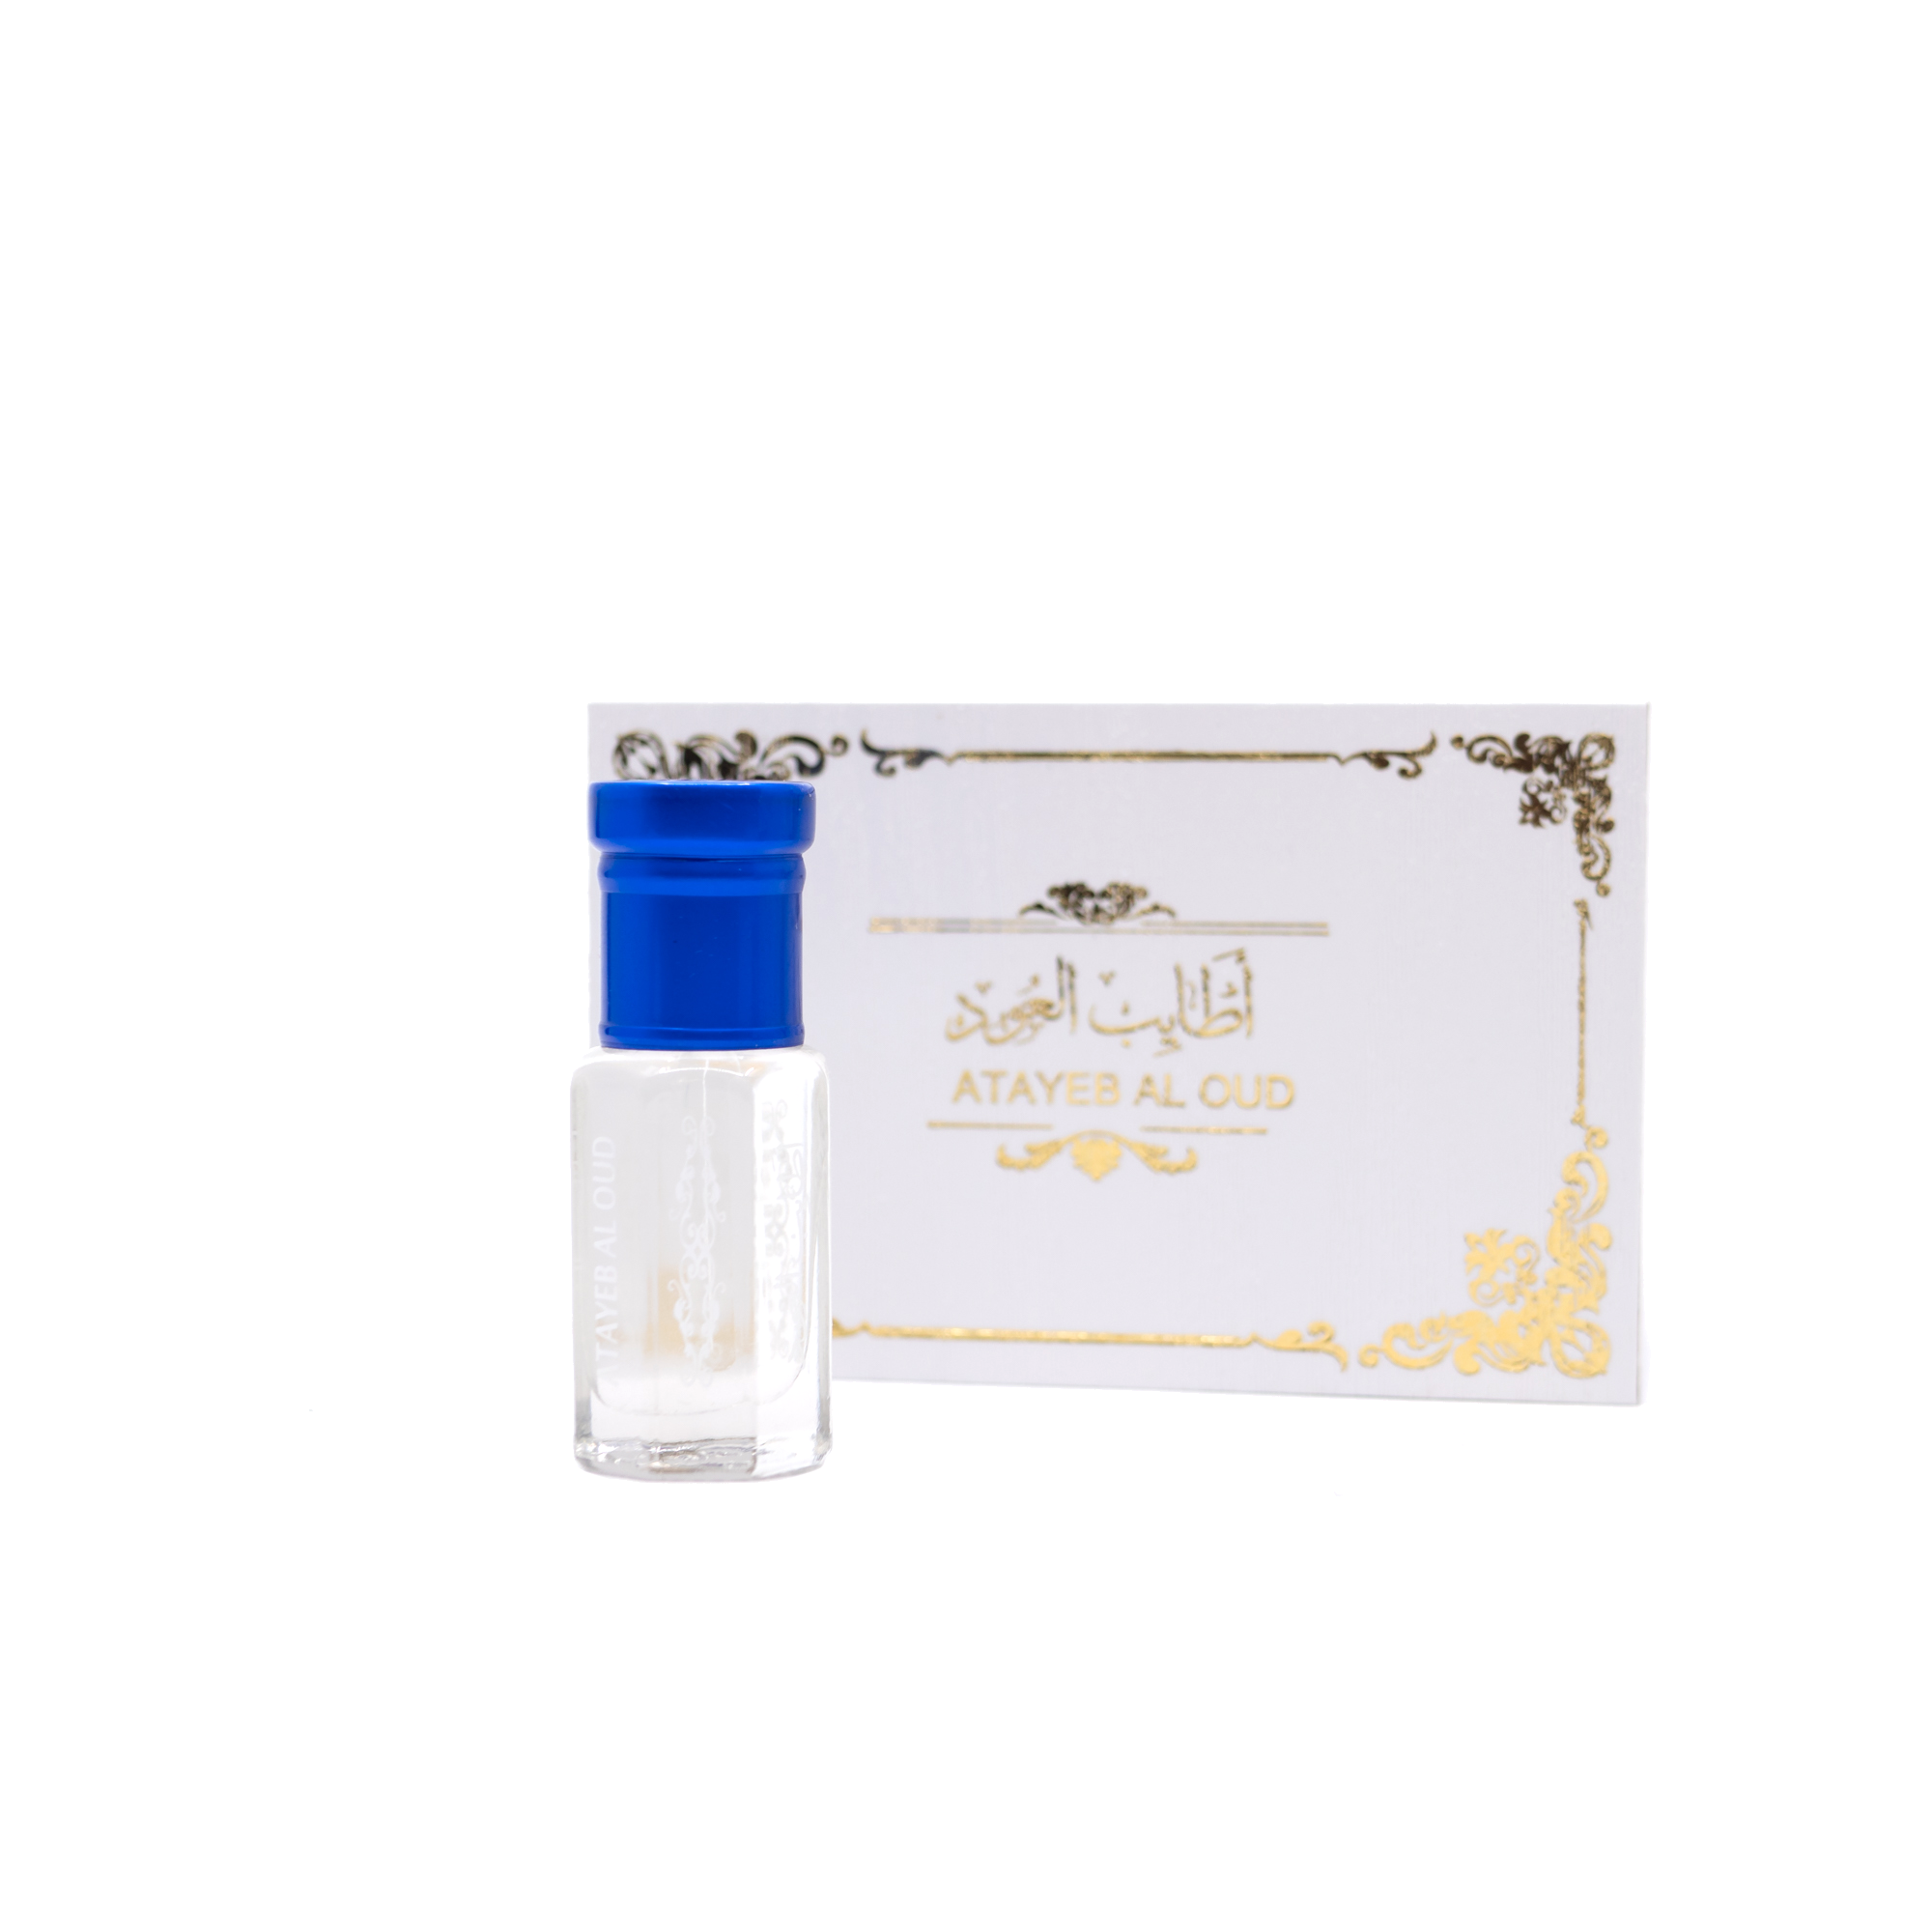 Misk Shafaf - M 002 | fragrance | luxury | beauty | captivating scent | long-lasting | elegance | alluring aroma | gender-neutral | olfactory masterpiece | Halabh.com